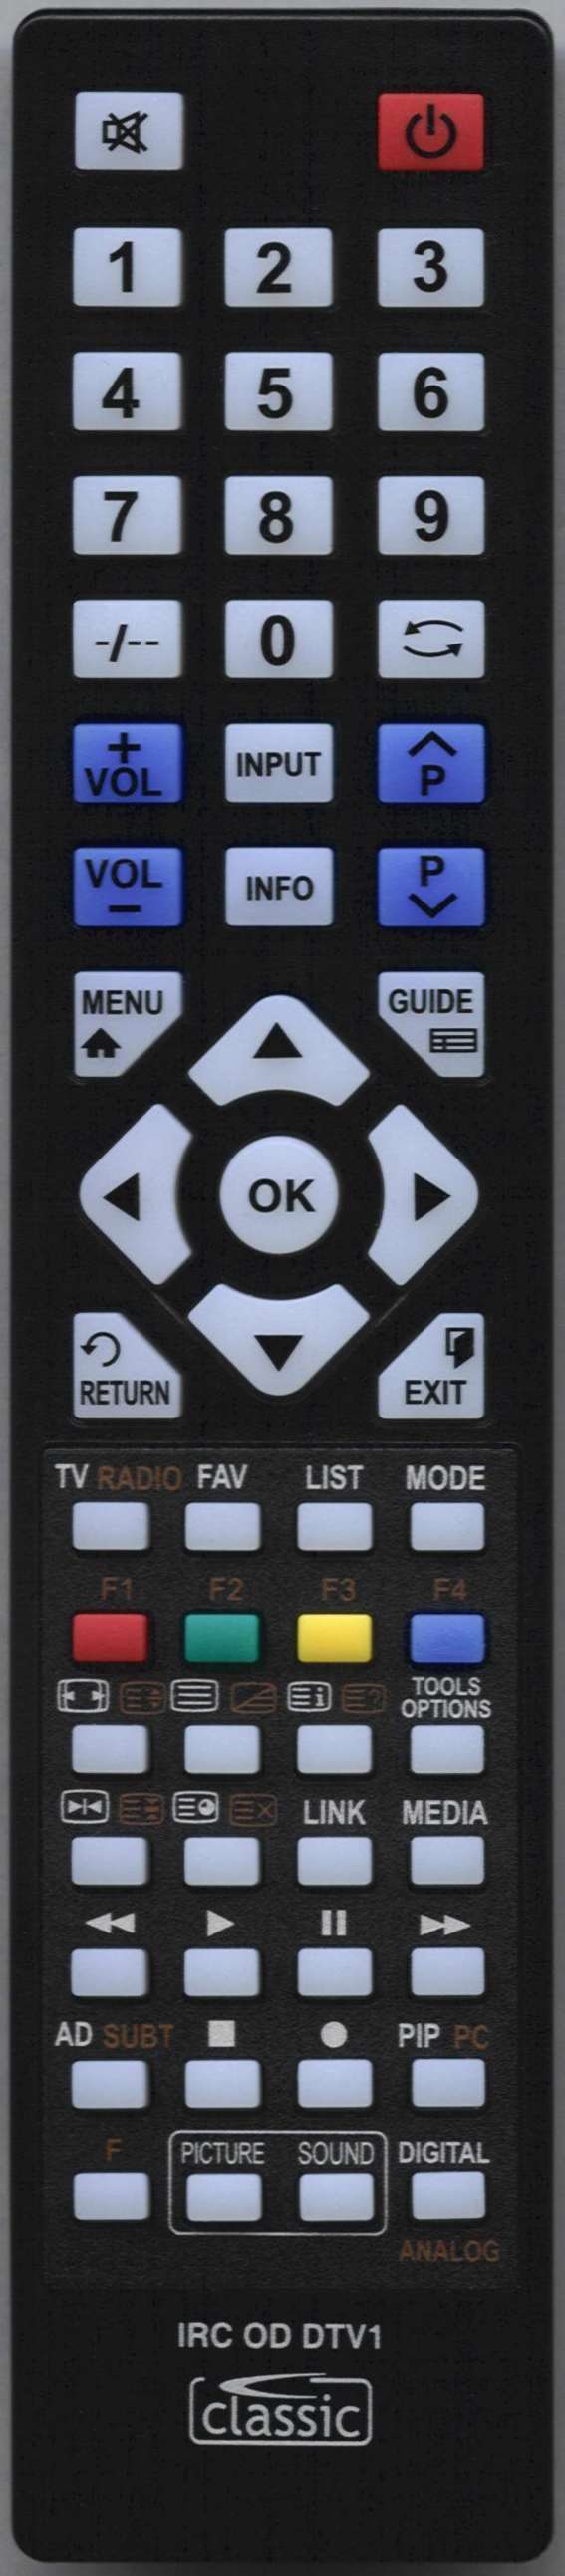 Orion CLB22B110 Remote Control